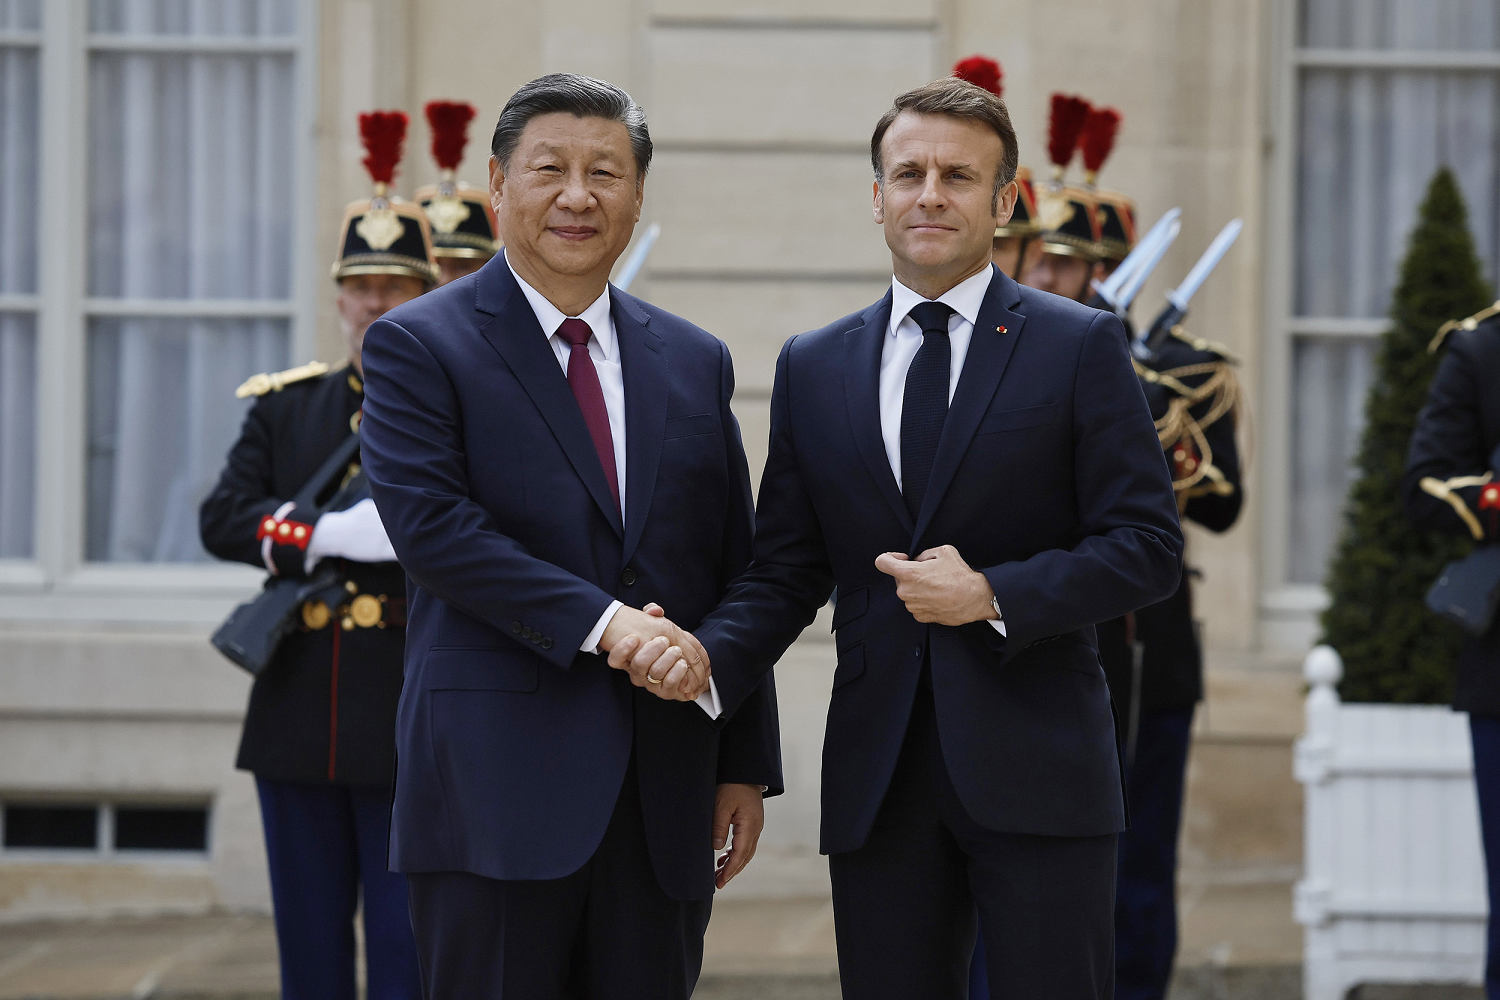 Macron makes Ukraine top priority as China's Xi Jinping visits Europe